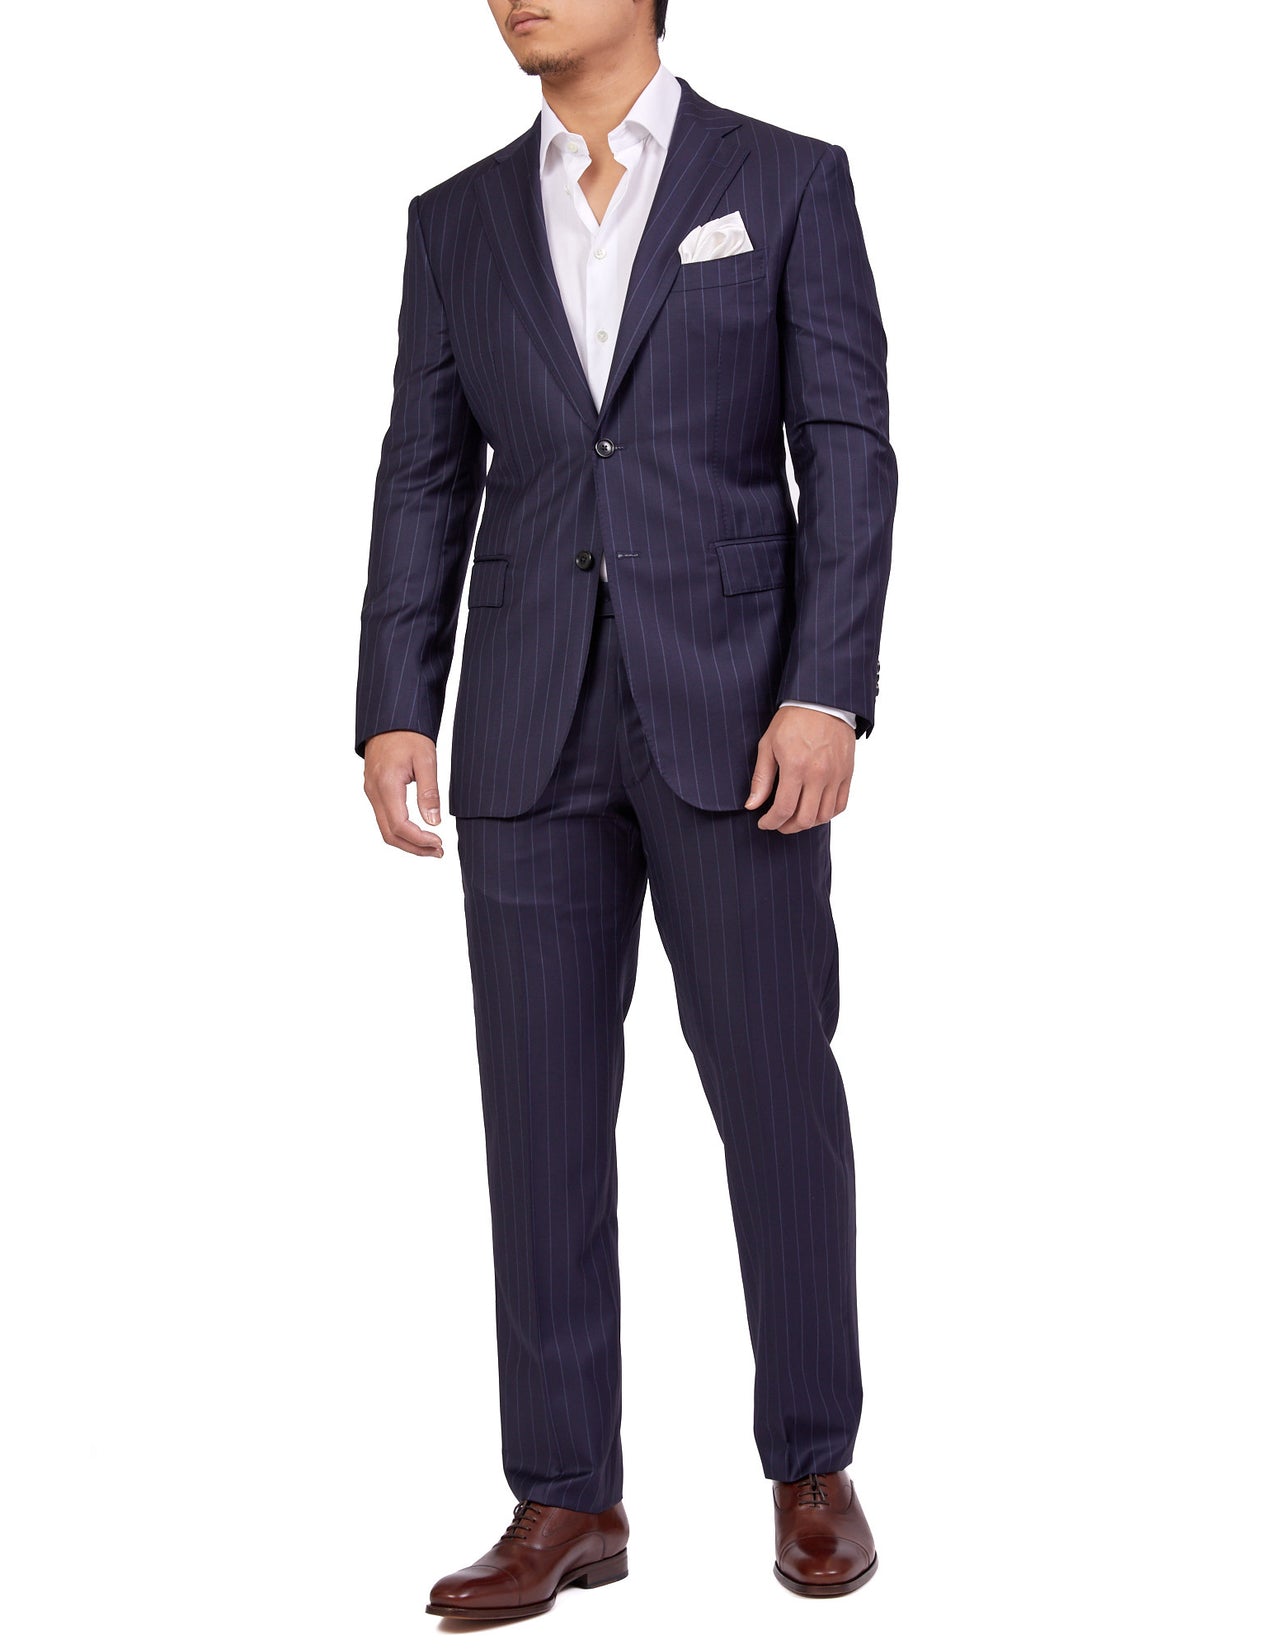 HENRY SARTORIAL Dun Full Canvas R-Stripe Suit NAVY LG